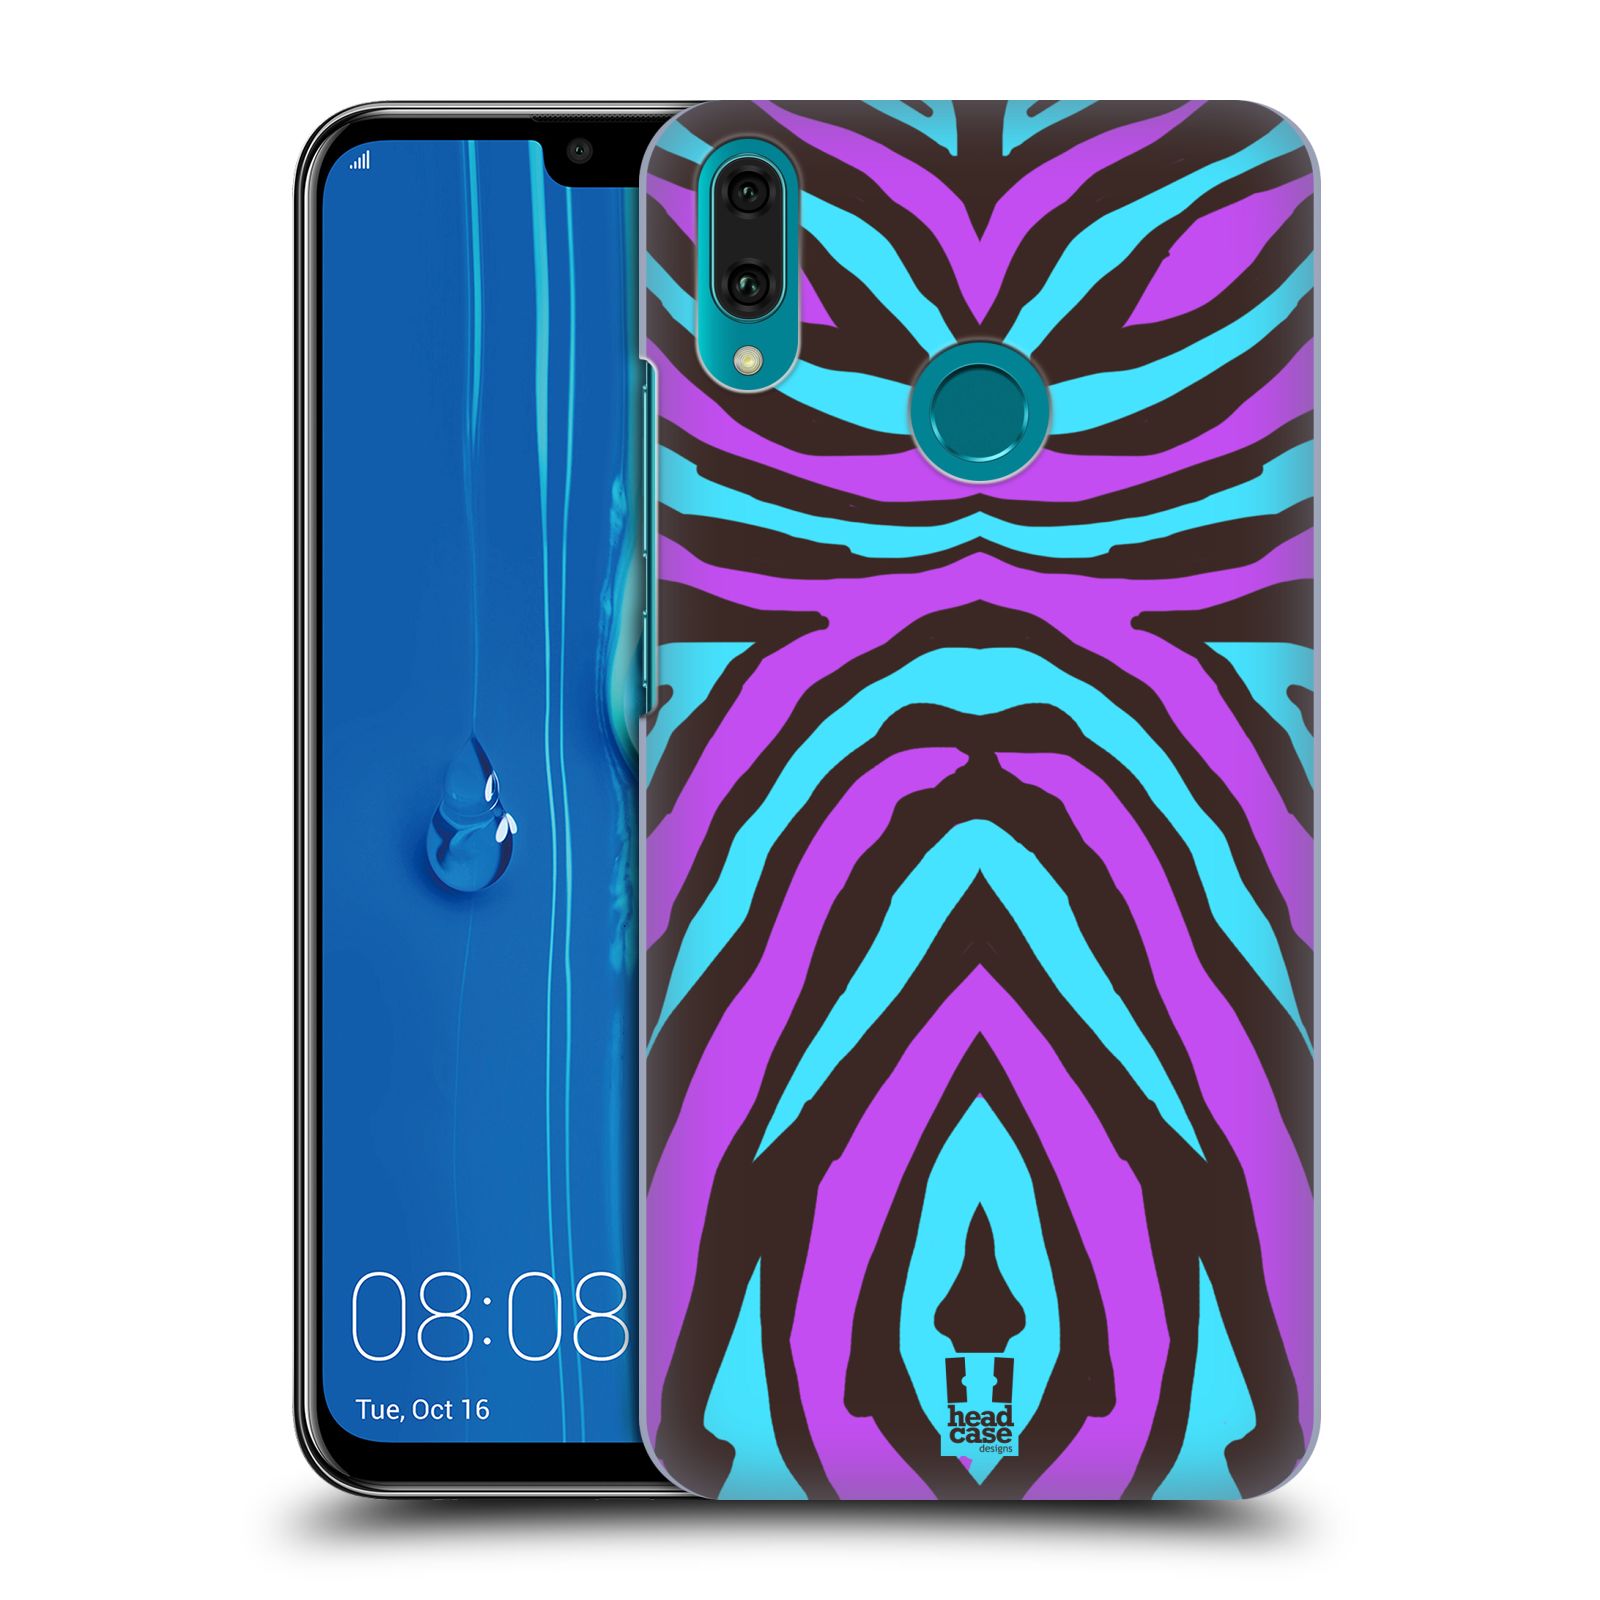 Pouzdro na mobil Huawei Y9 2019 - HEAD CASE - vzor Divočina zvíře 2 bláznivé pruhy fialová a modrá